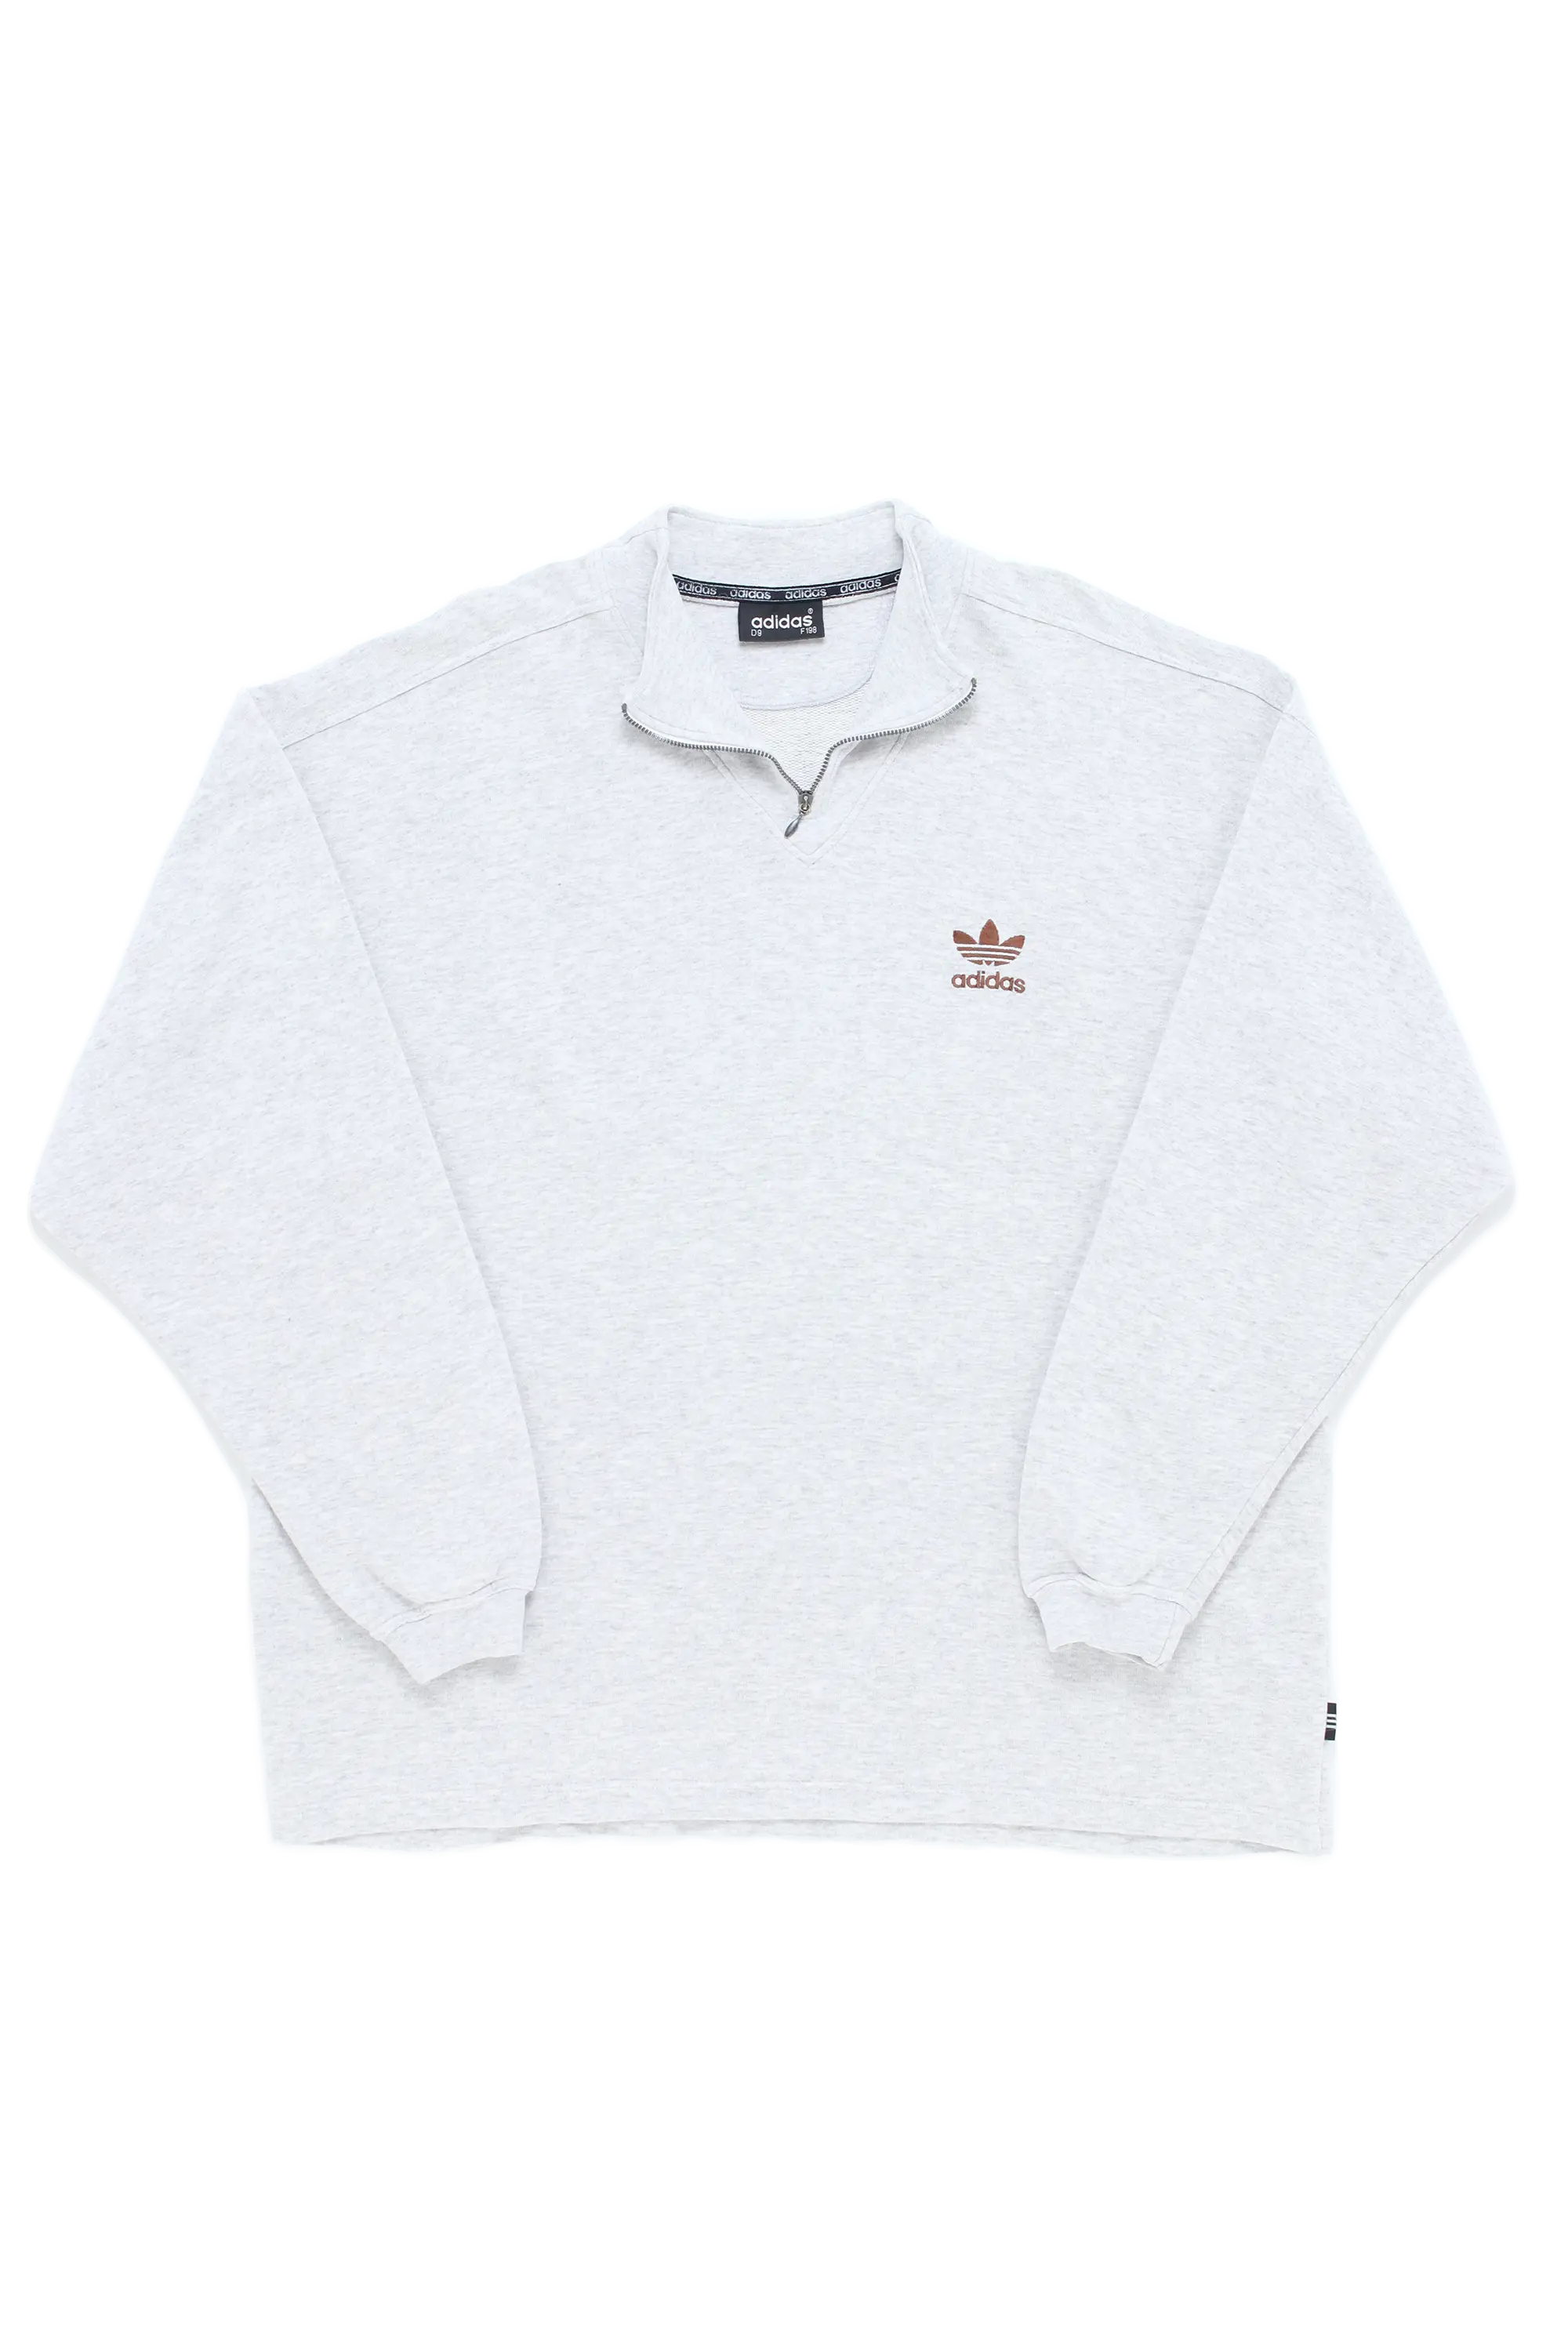 Adidas '90s Zip Sweater